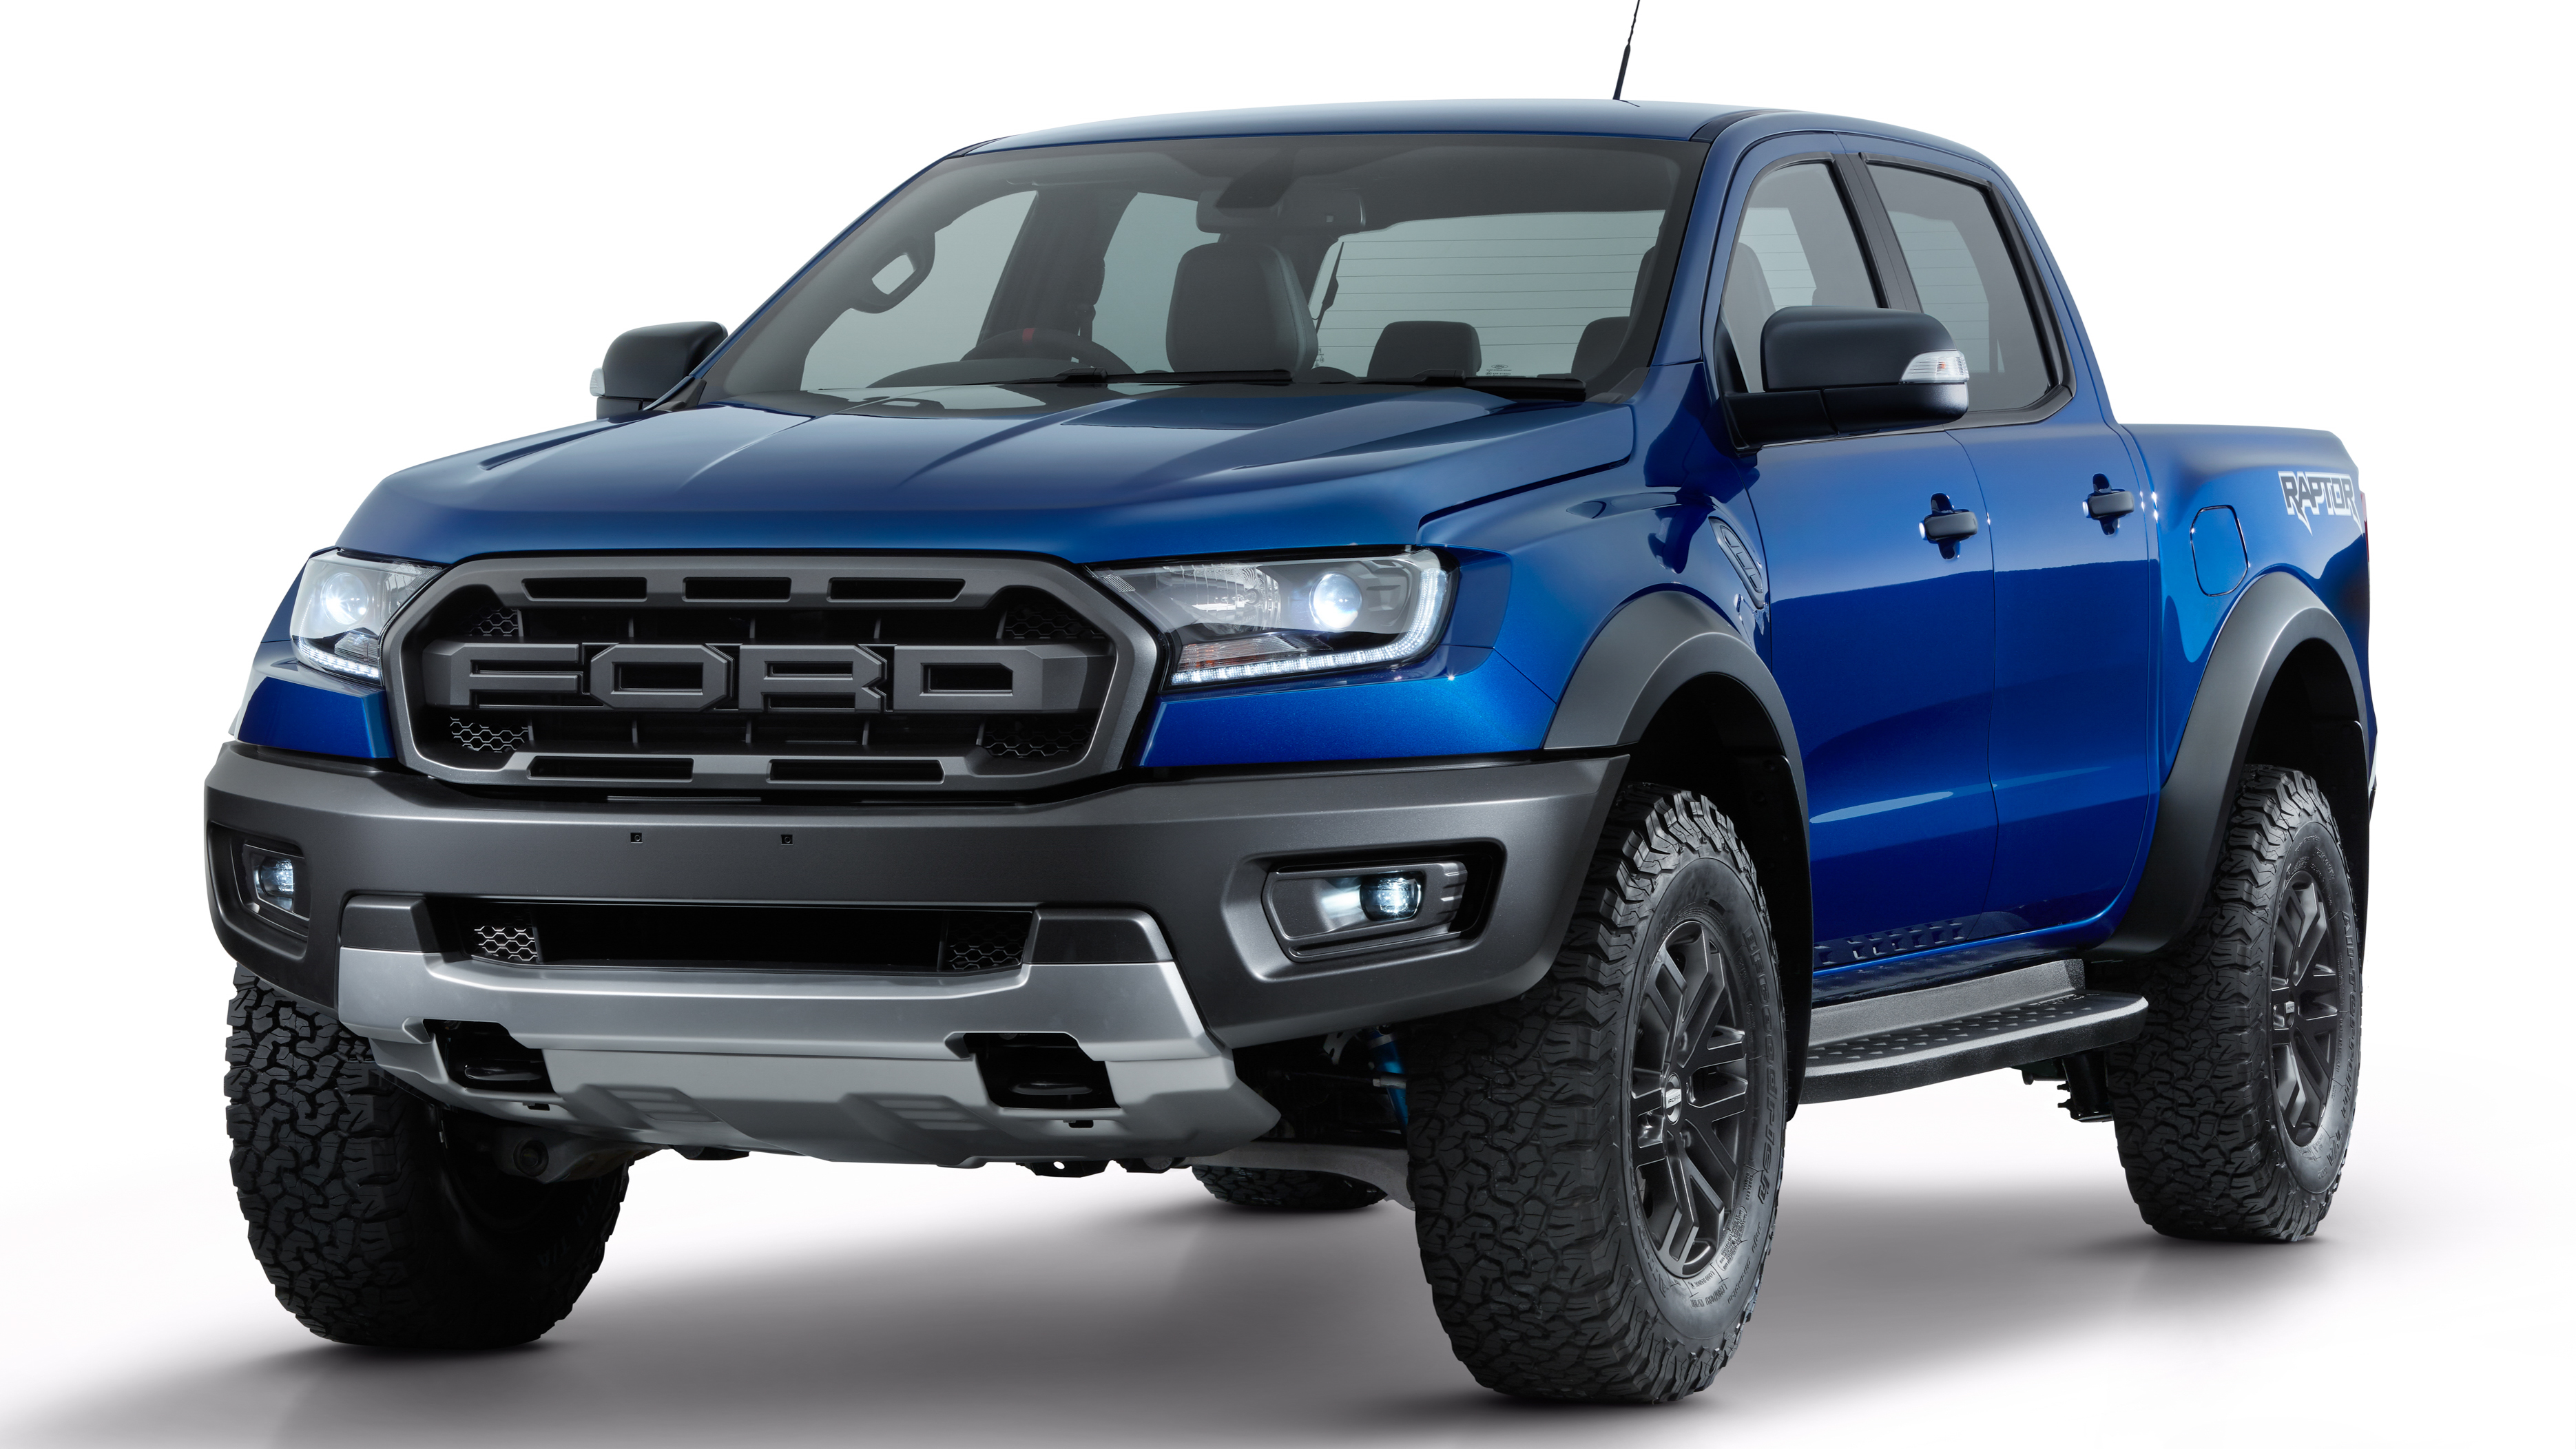 Ford Ranger Raptor: Leistungsdefizit